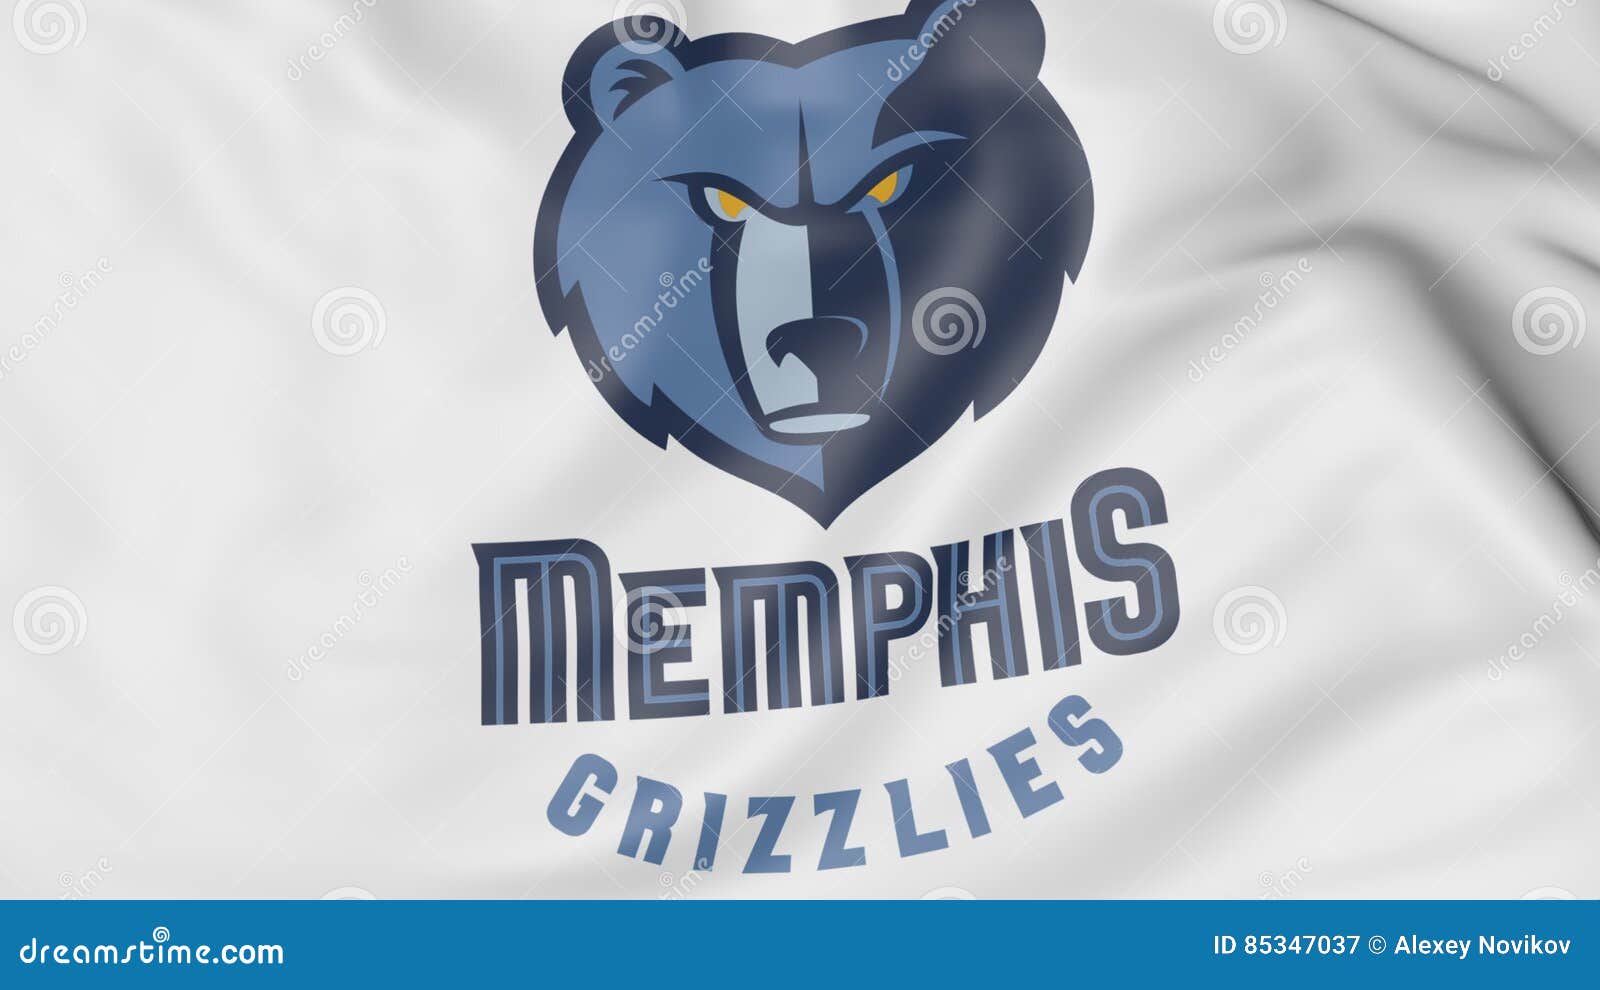 https://thumbs.dreamstime.com/z/close-up-waving-flag-memphis-grizzlies-nba-basketball-team-logo-d-rendering-united-states-85347037.jpg